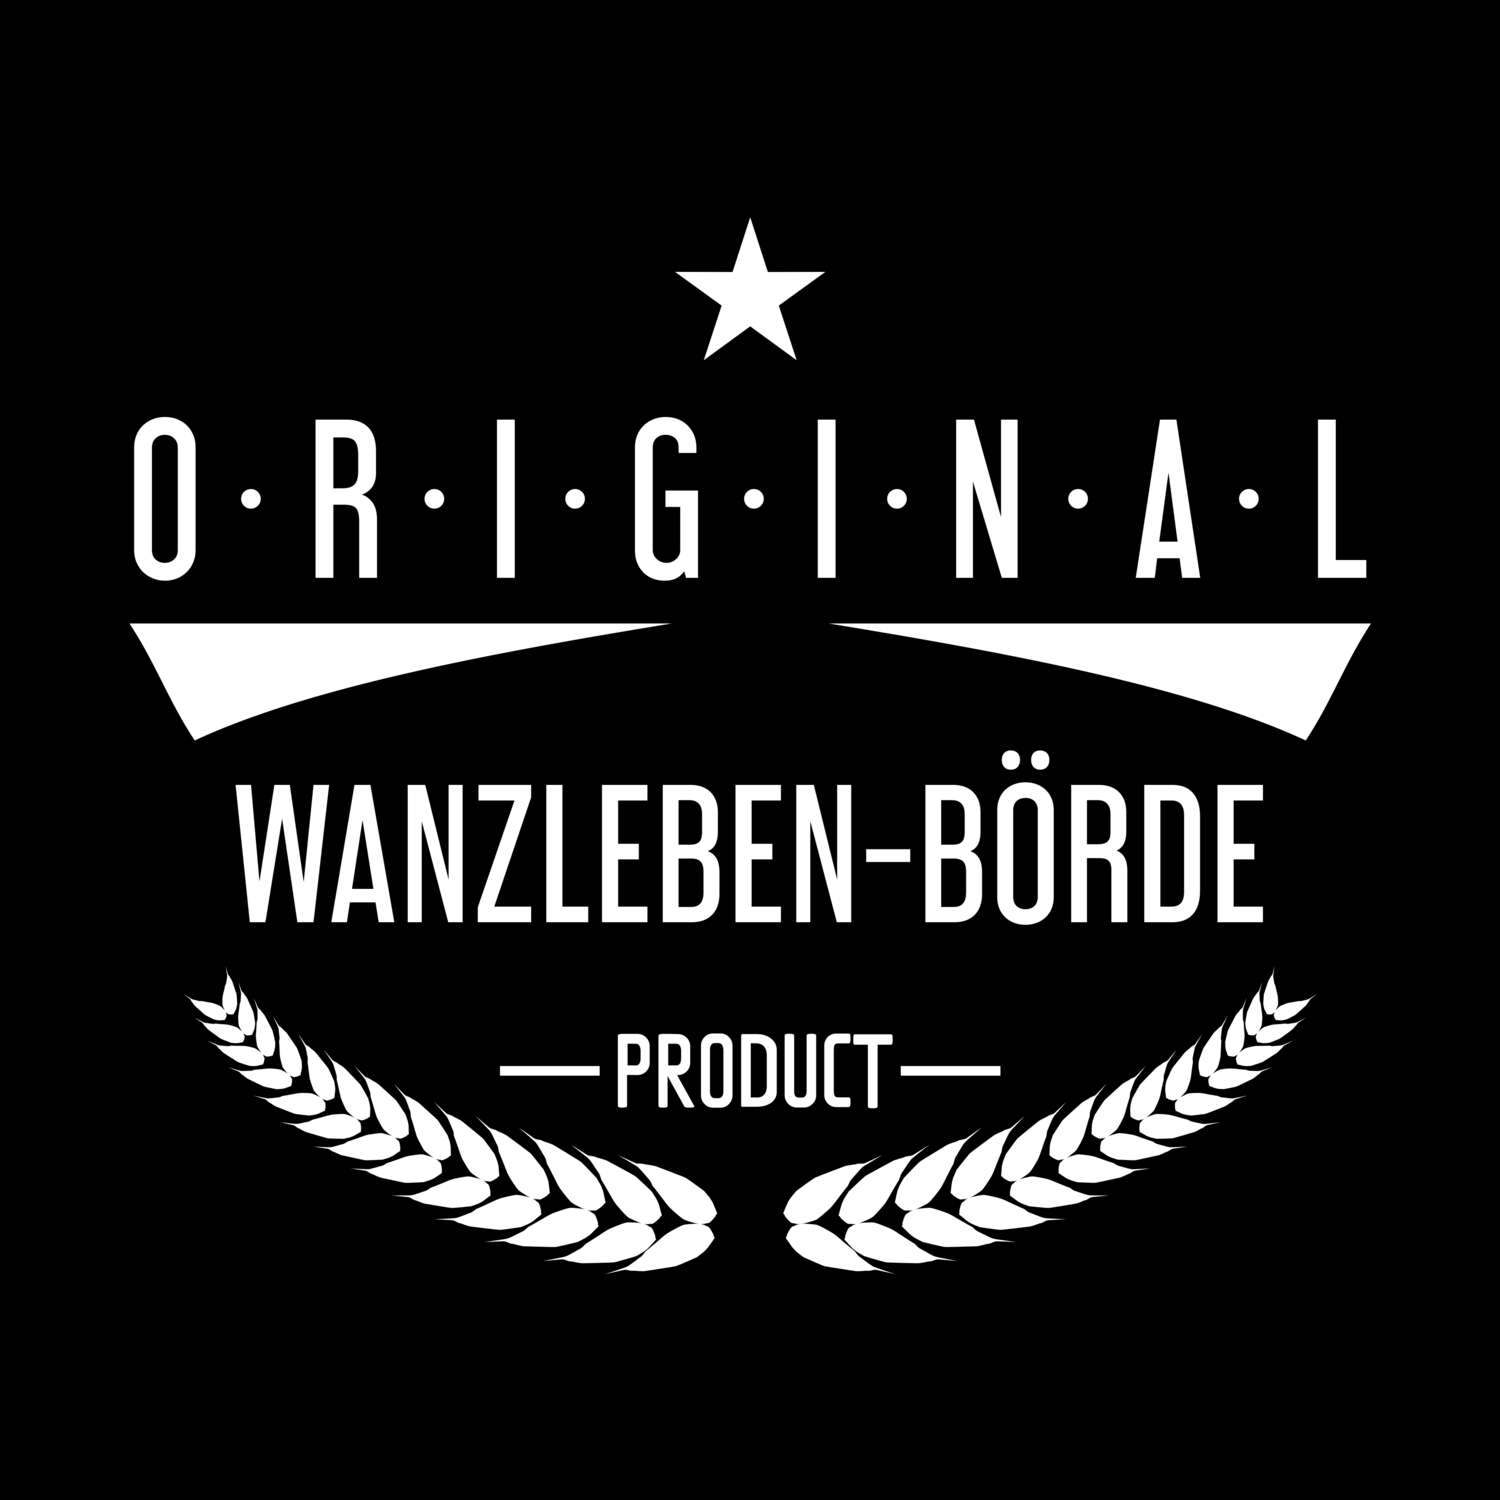 Wanzleben-Börde T-Shirt »Original Product«